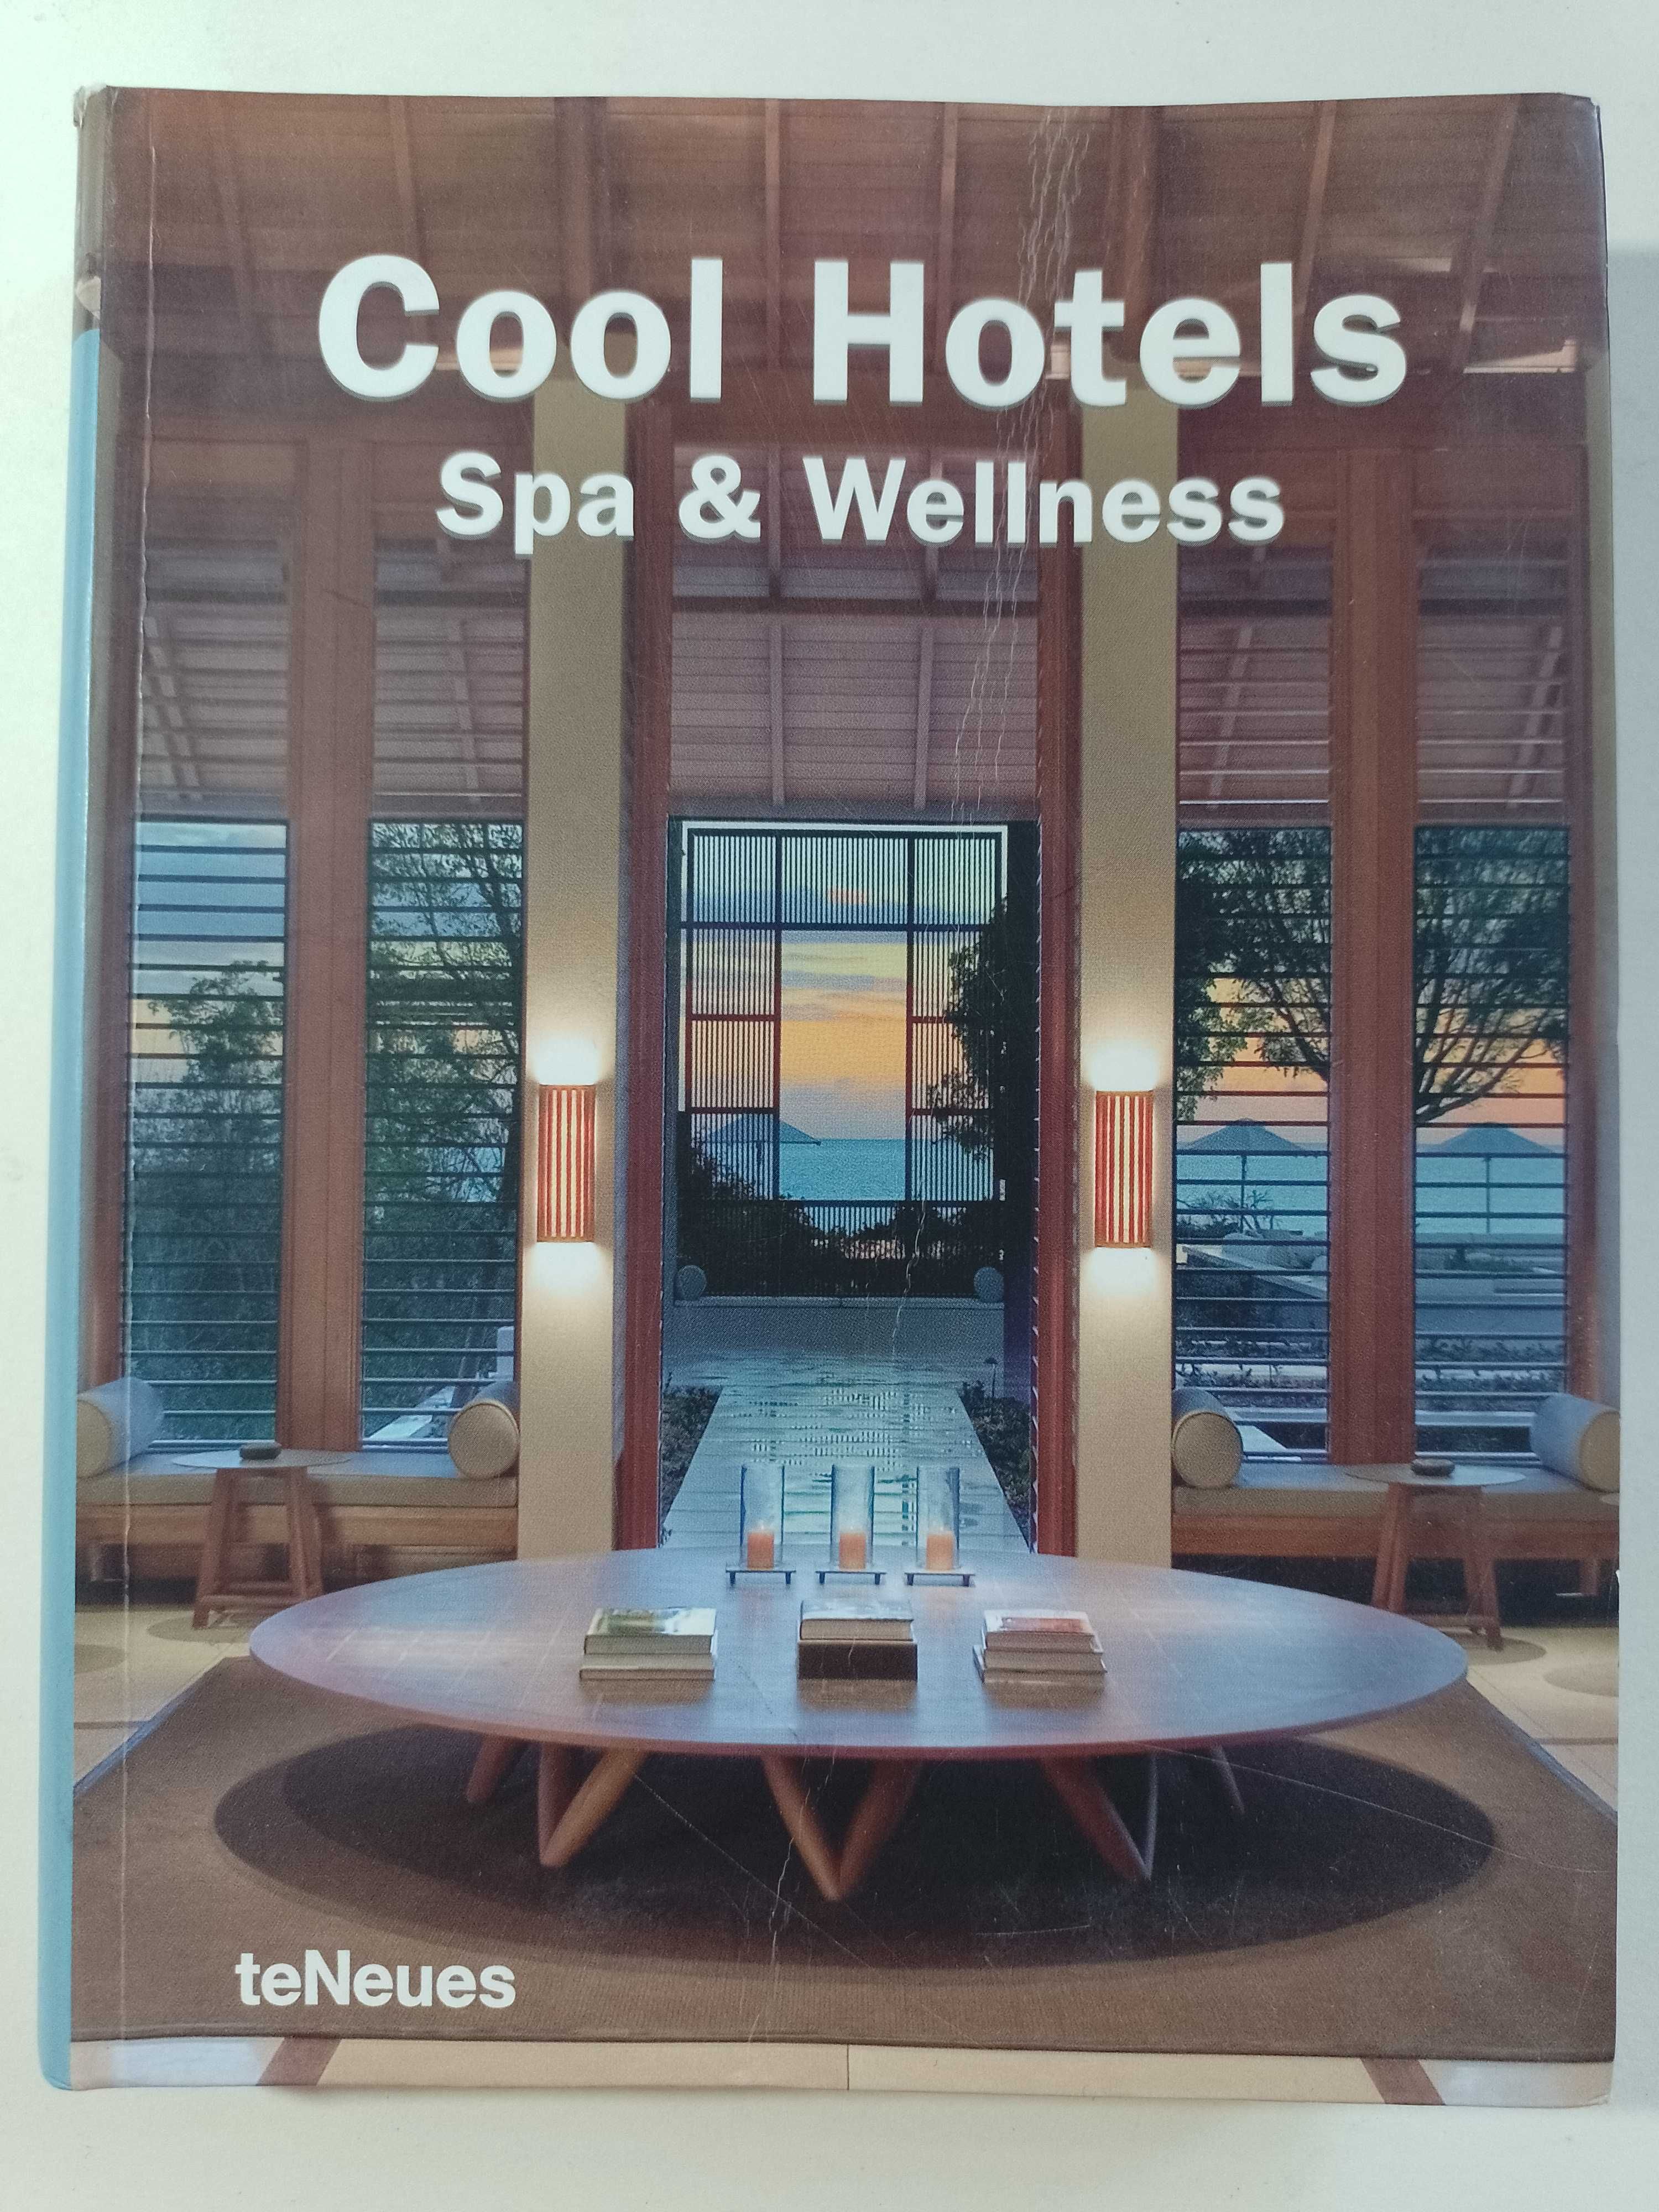 Cool Hotels, poradnik projektowania, architektura, wellness